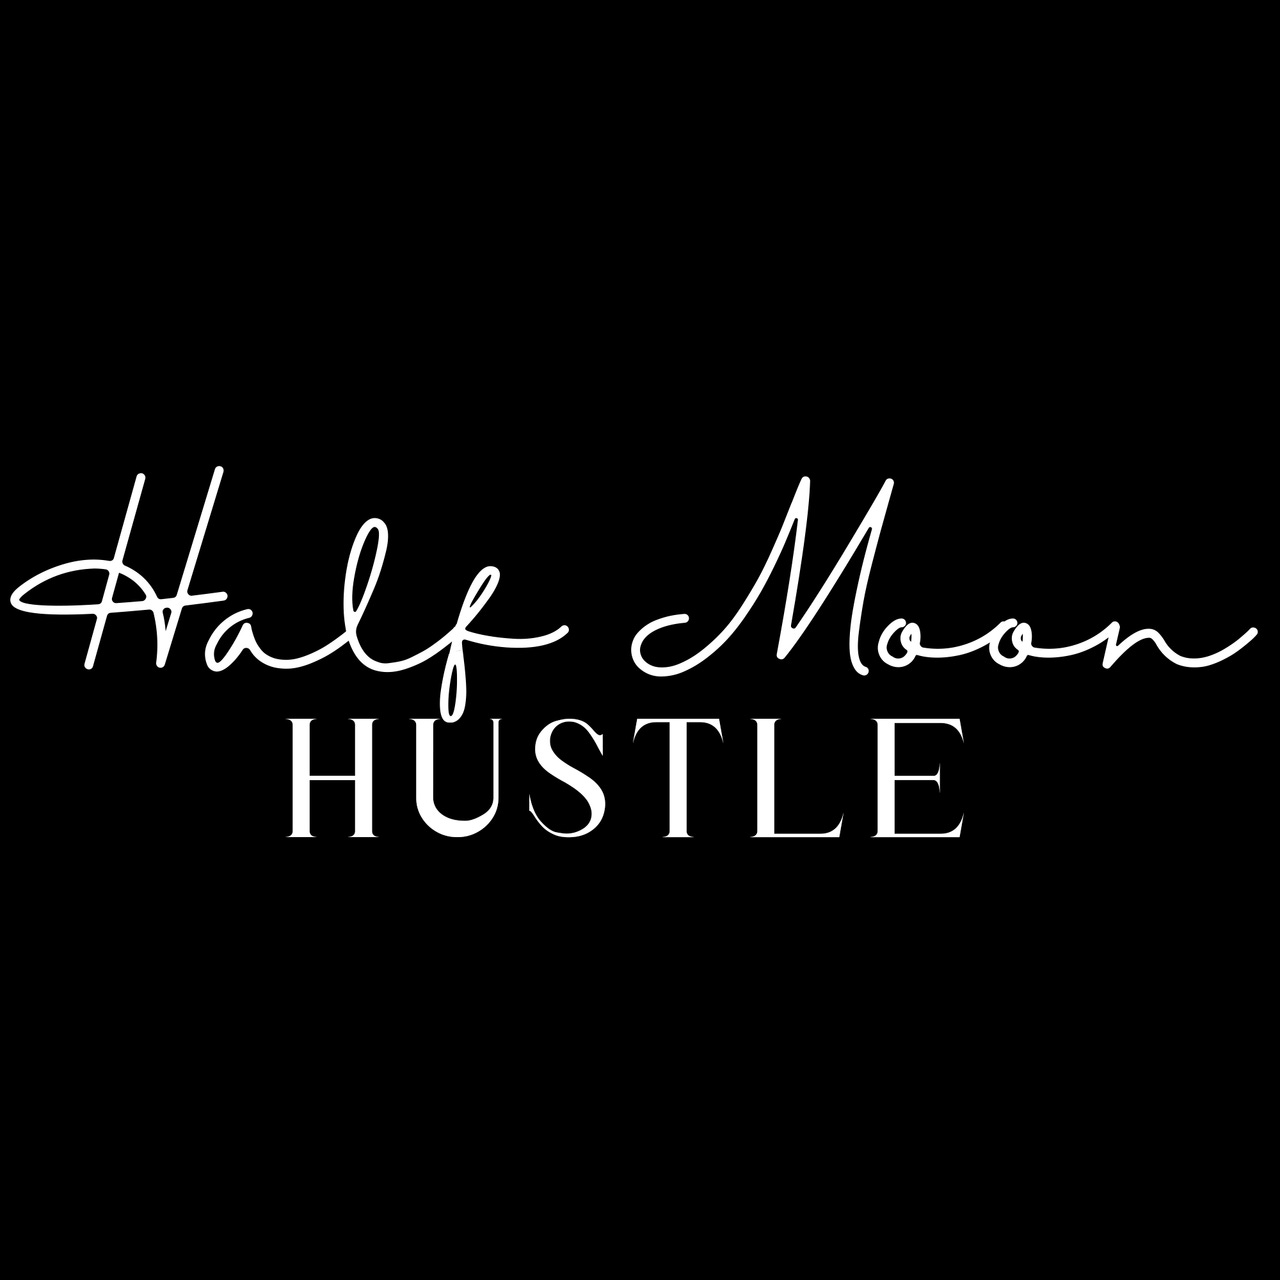 Artwork for Half Moon Hustle